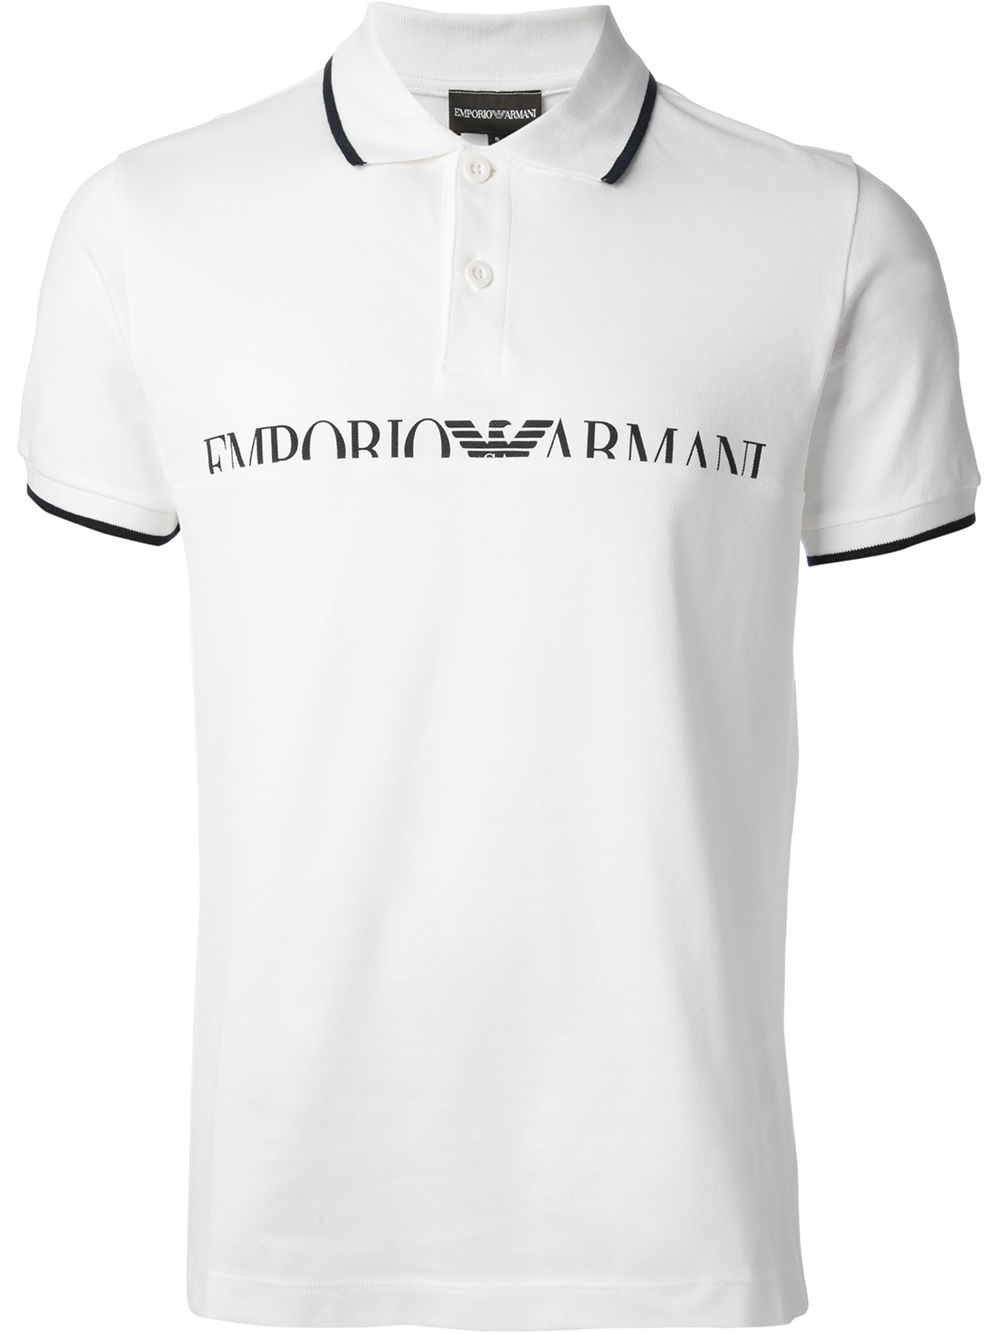 Lyst - Emporio Armani Polo Shirt in White for Men